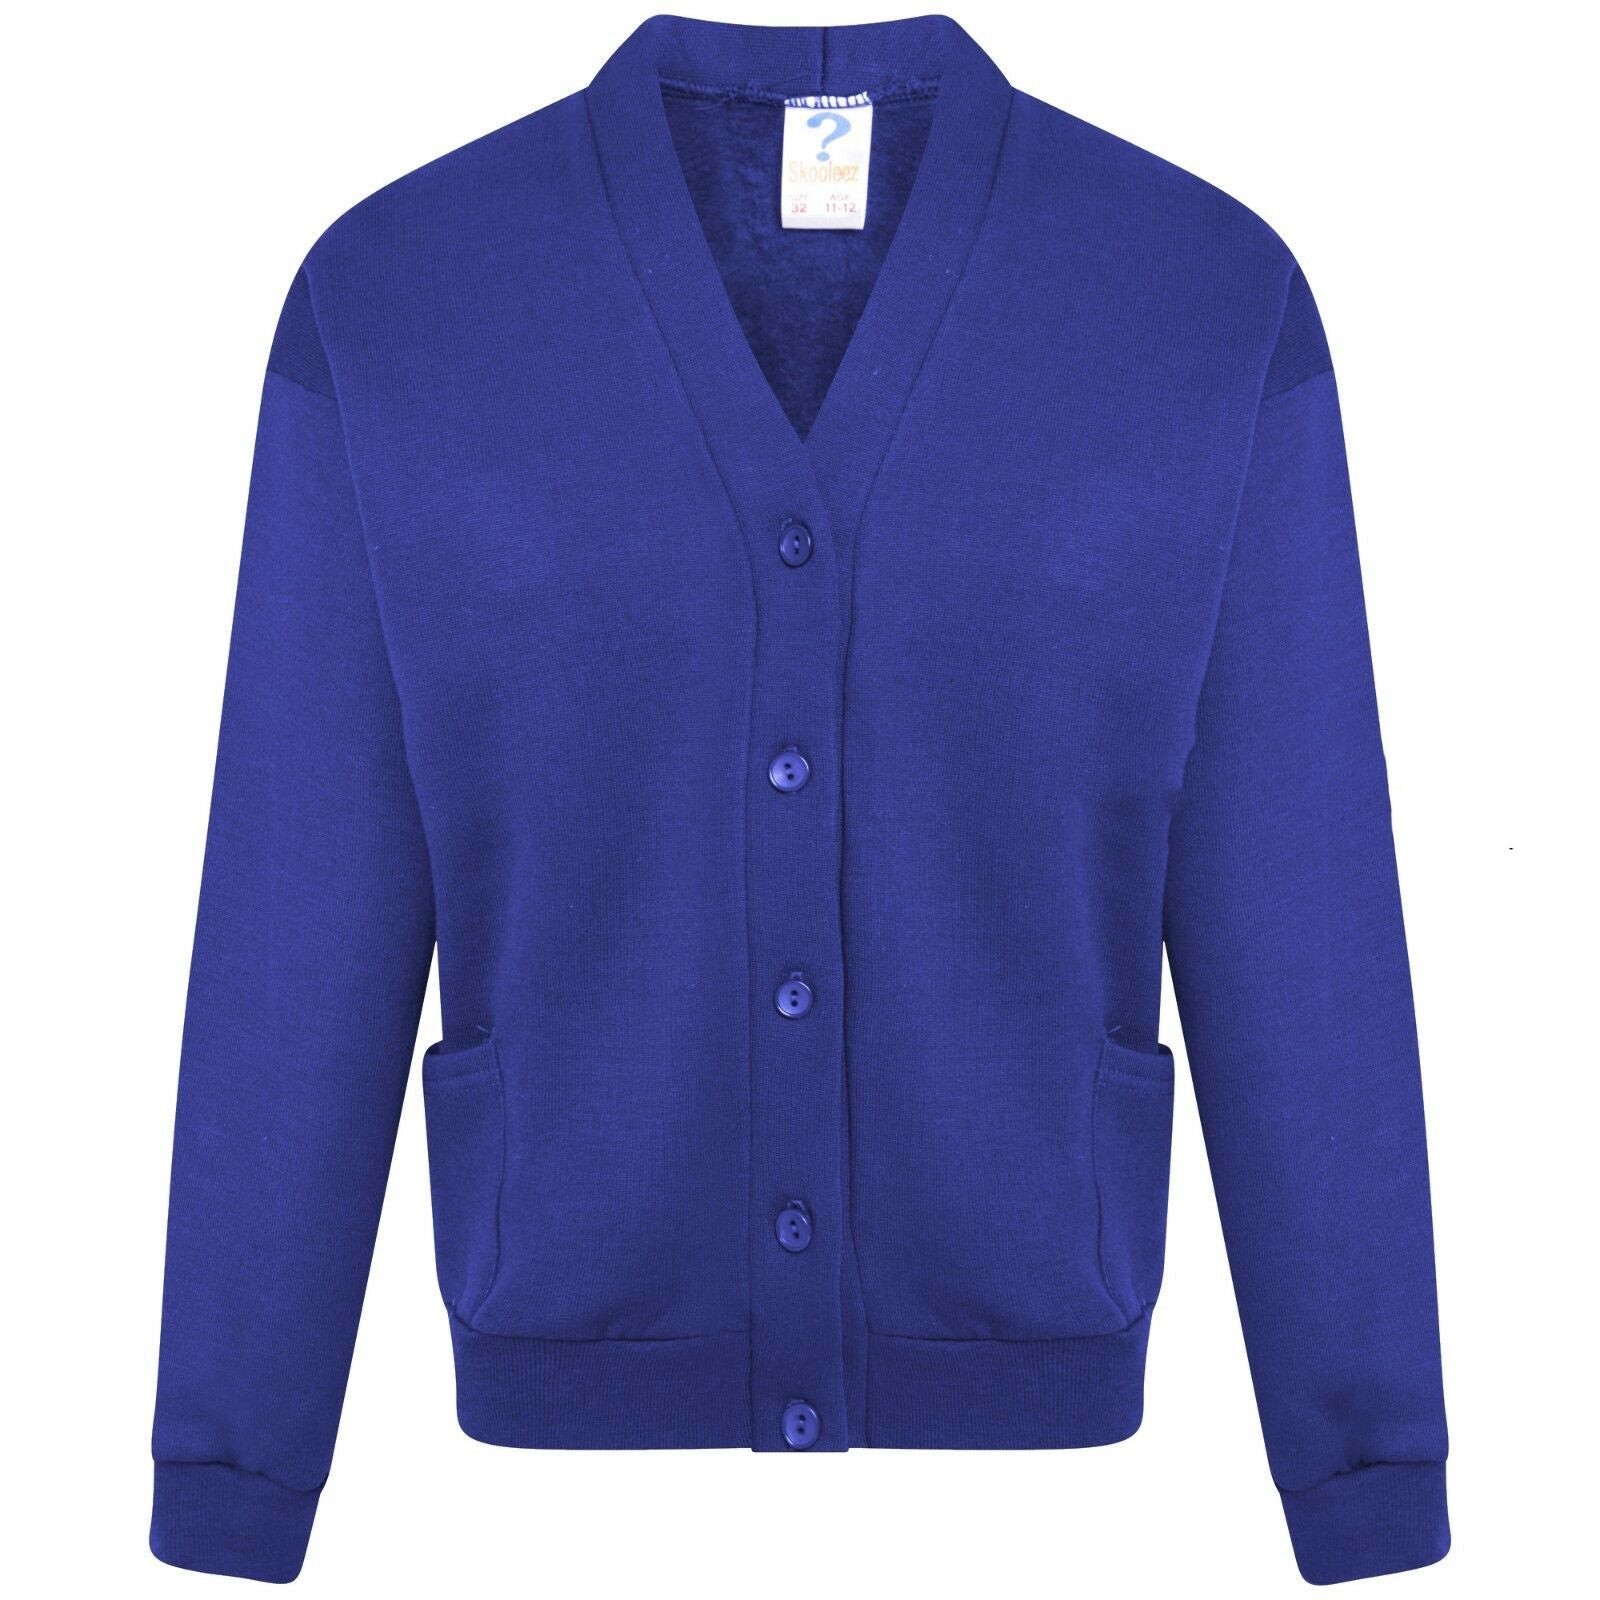 Royal Blue School Uniform Fleece Cardigan Button Closure Front Kids Children For Girls Unisex